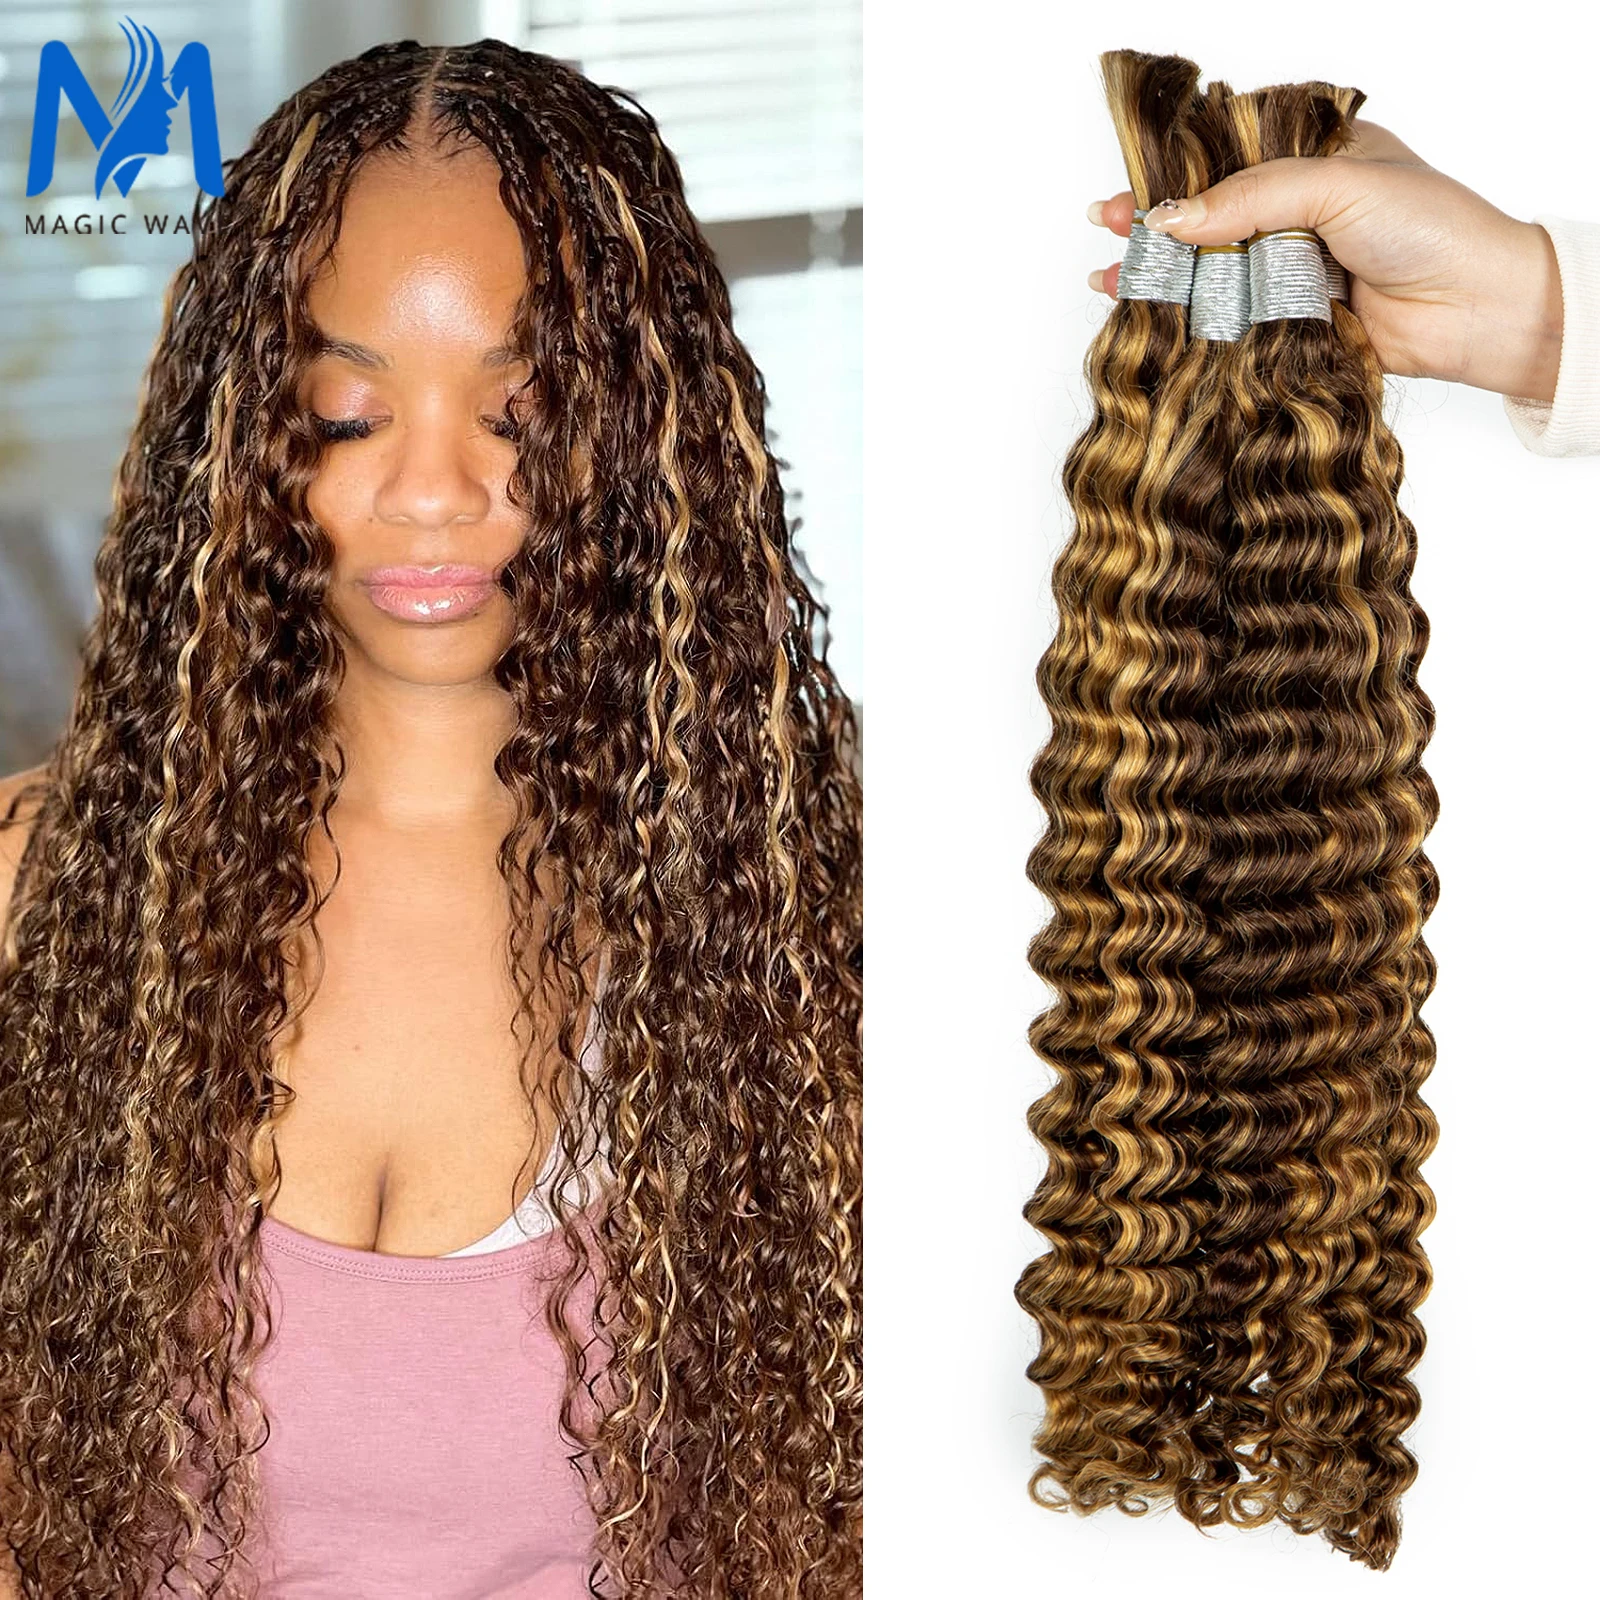 

Deep Curly Color Wavey Virgin Hair Extensions for Hair Salon Braiding 16-28 Inches P4/27 Highlight Brown Bulk Hair Extensions